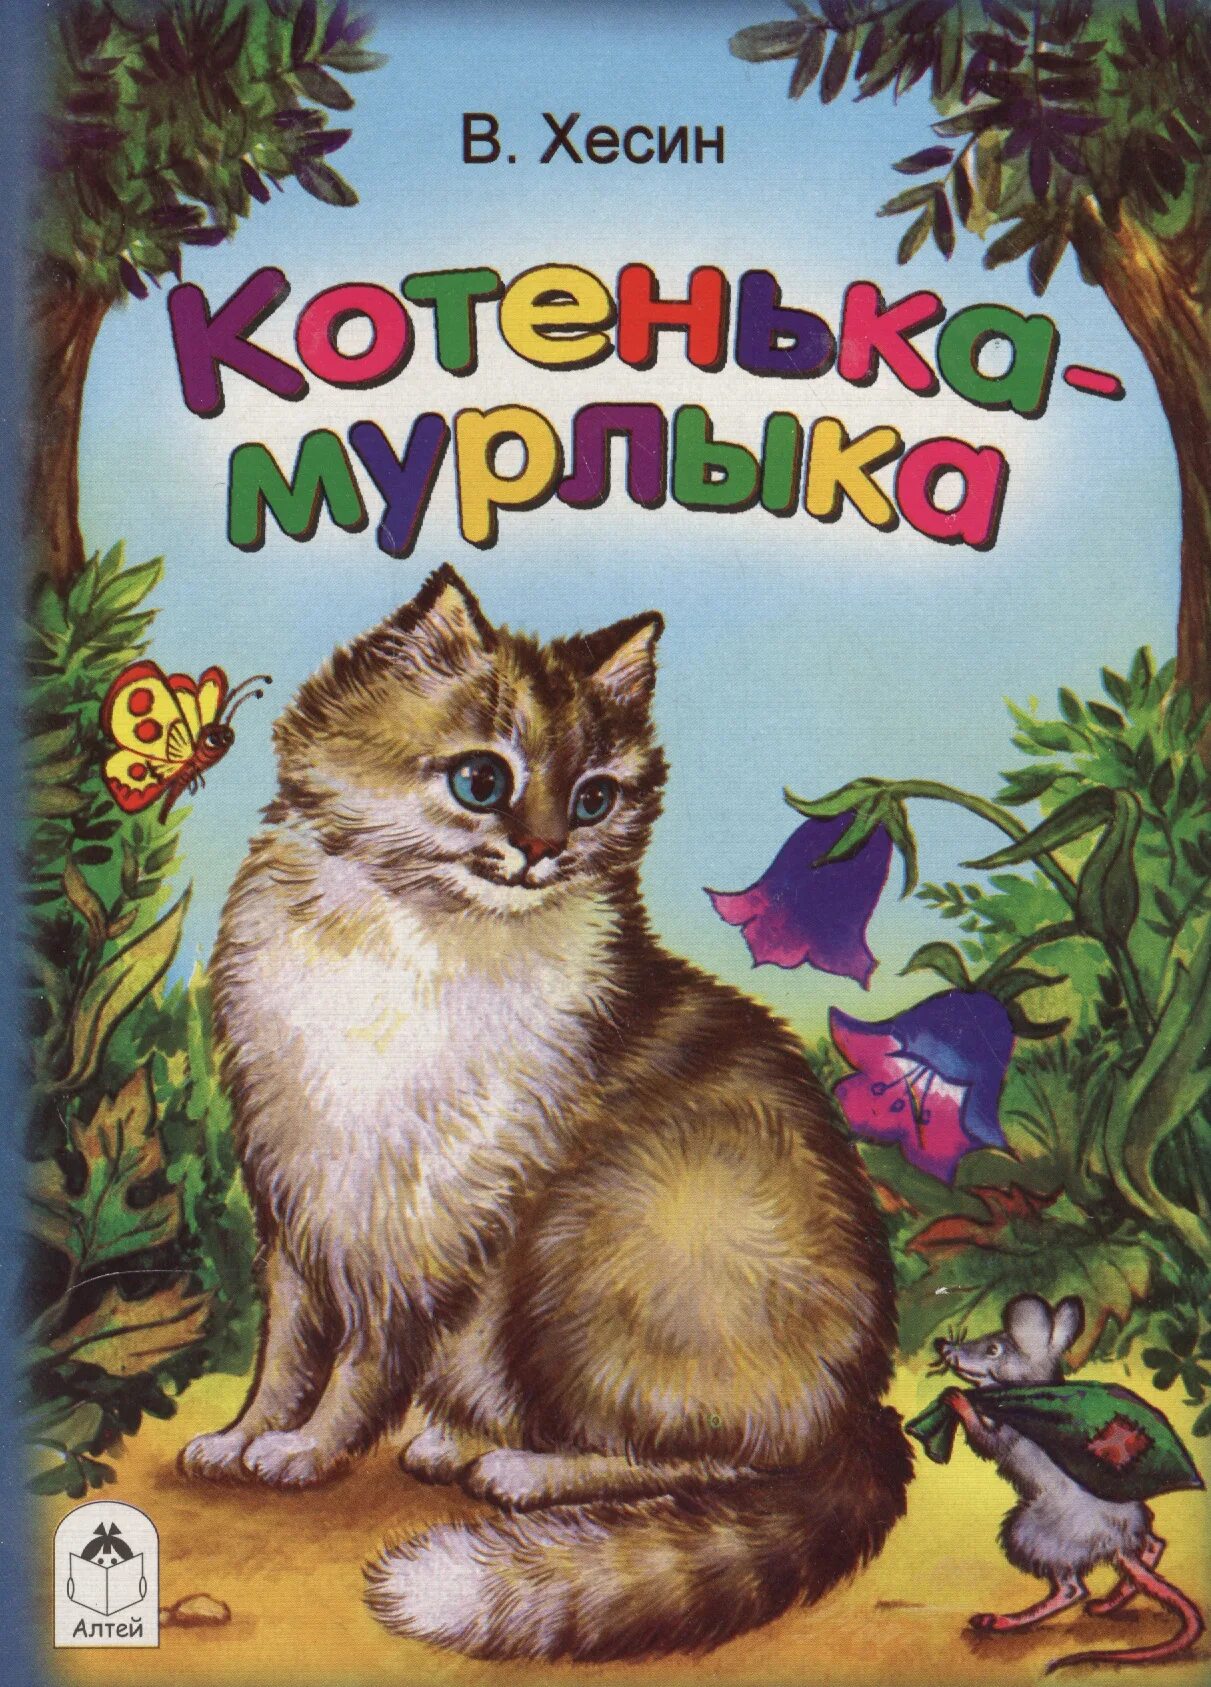 Книги про котов для детей. Хесин в. "котенька-Мурлыка". Кот Мурлыка рисунок. Котик Мурлыка.